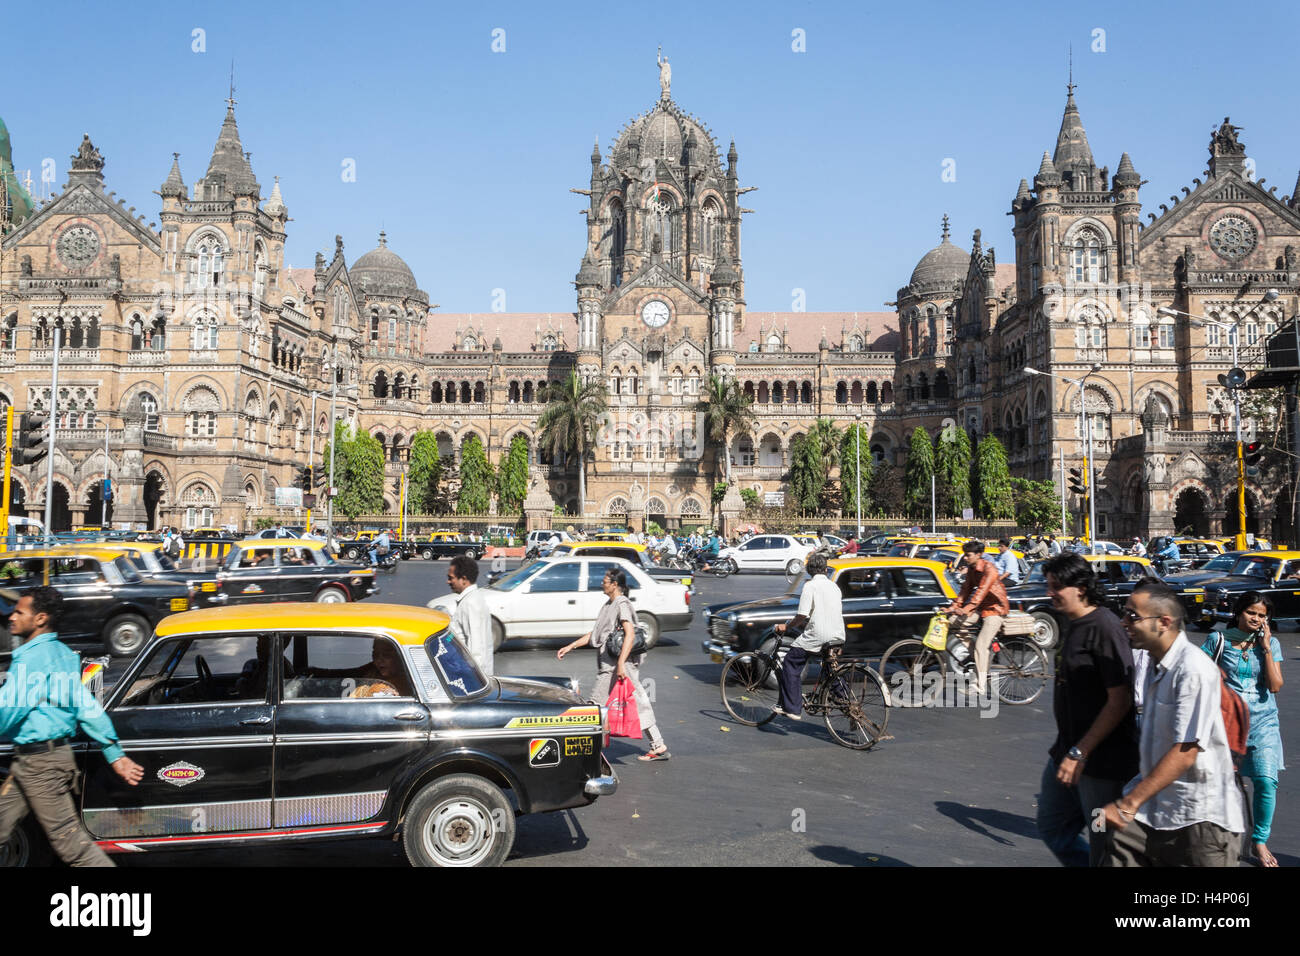 La gare Chhatrapati Shivaji, CST, alias Victoria Terminus, gare,VT,Mumbai Bombay,Maharashtra,Inde,France Asie. Banque D'Images